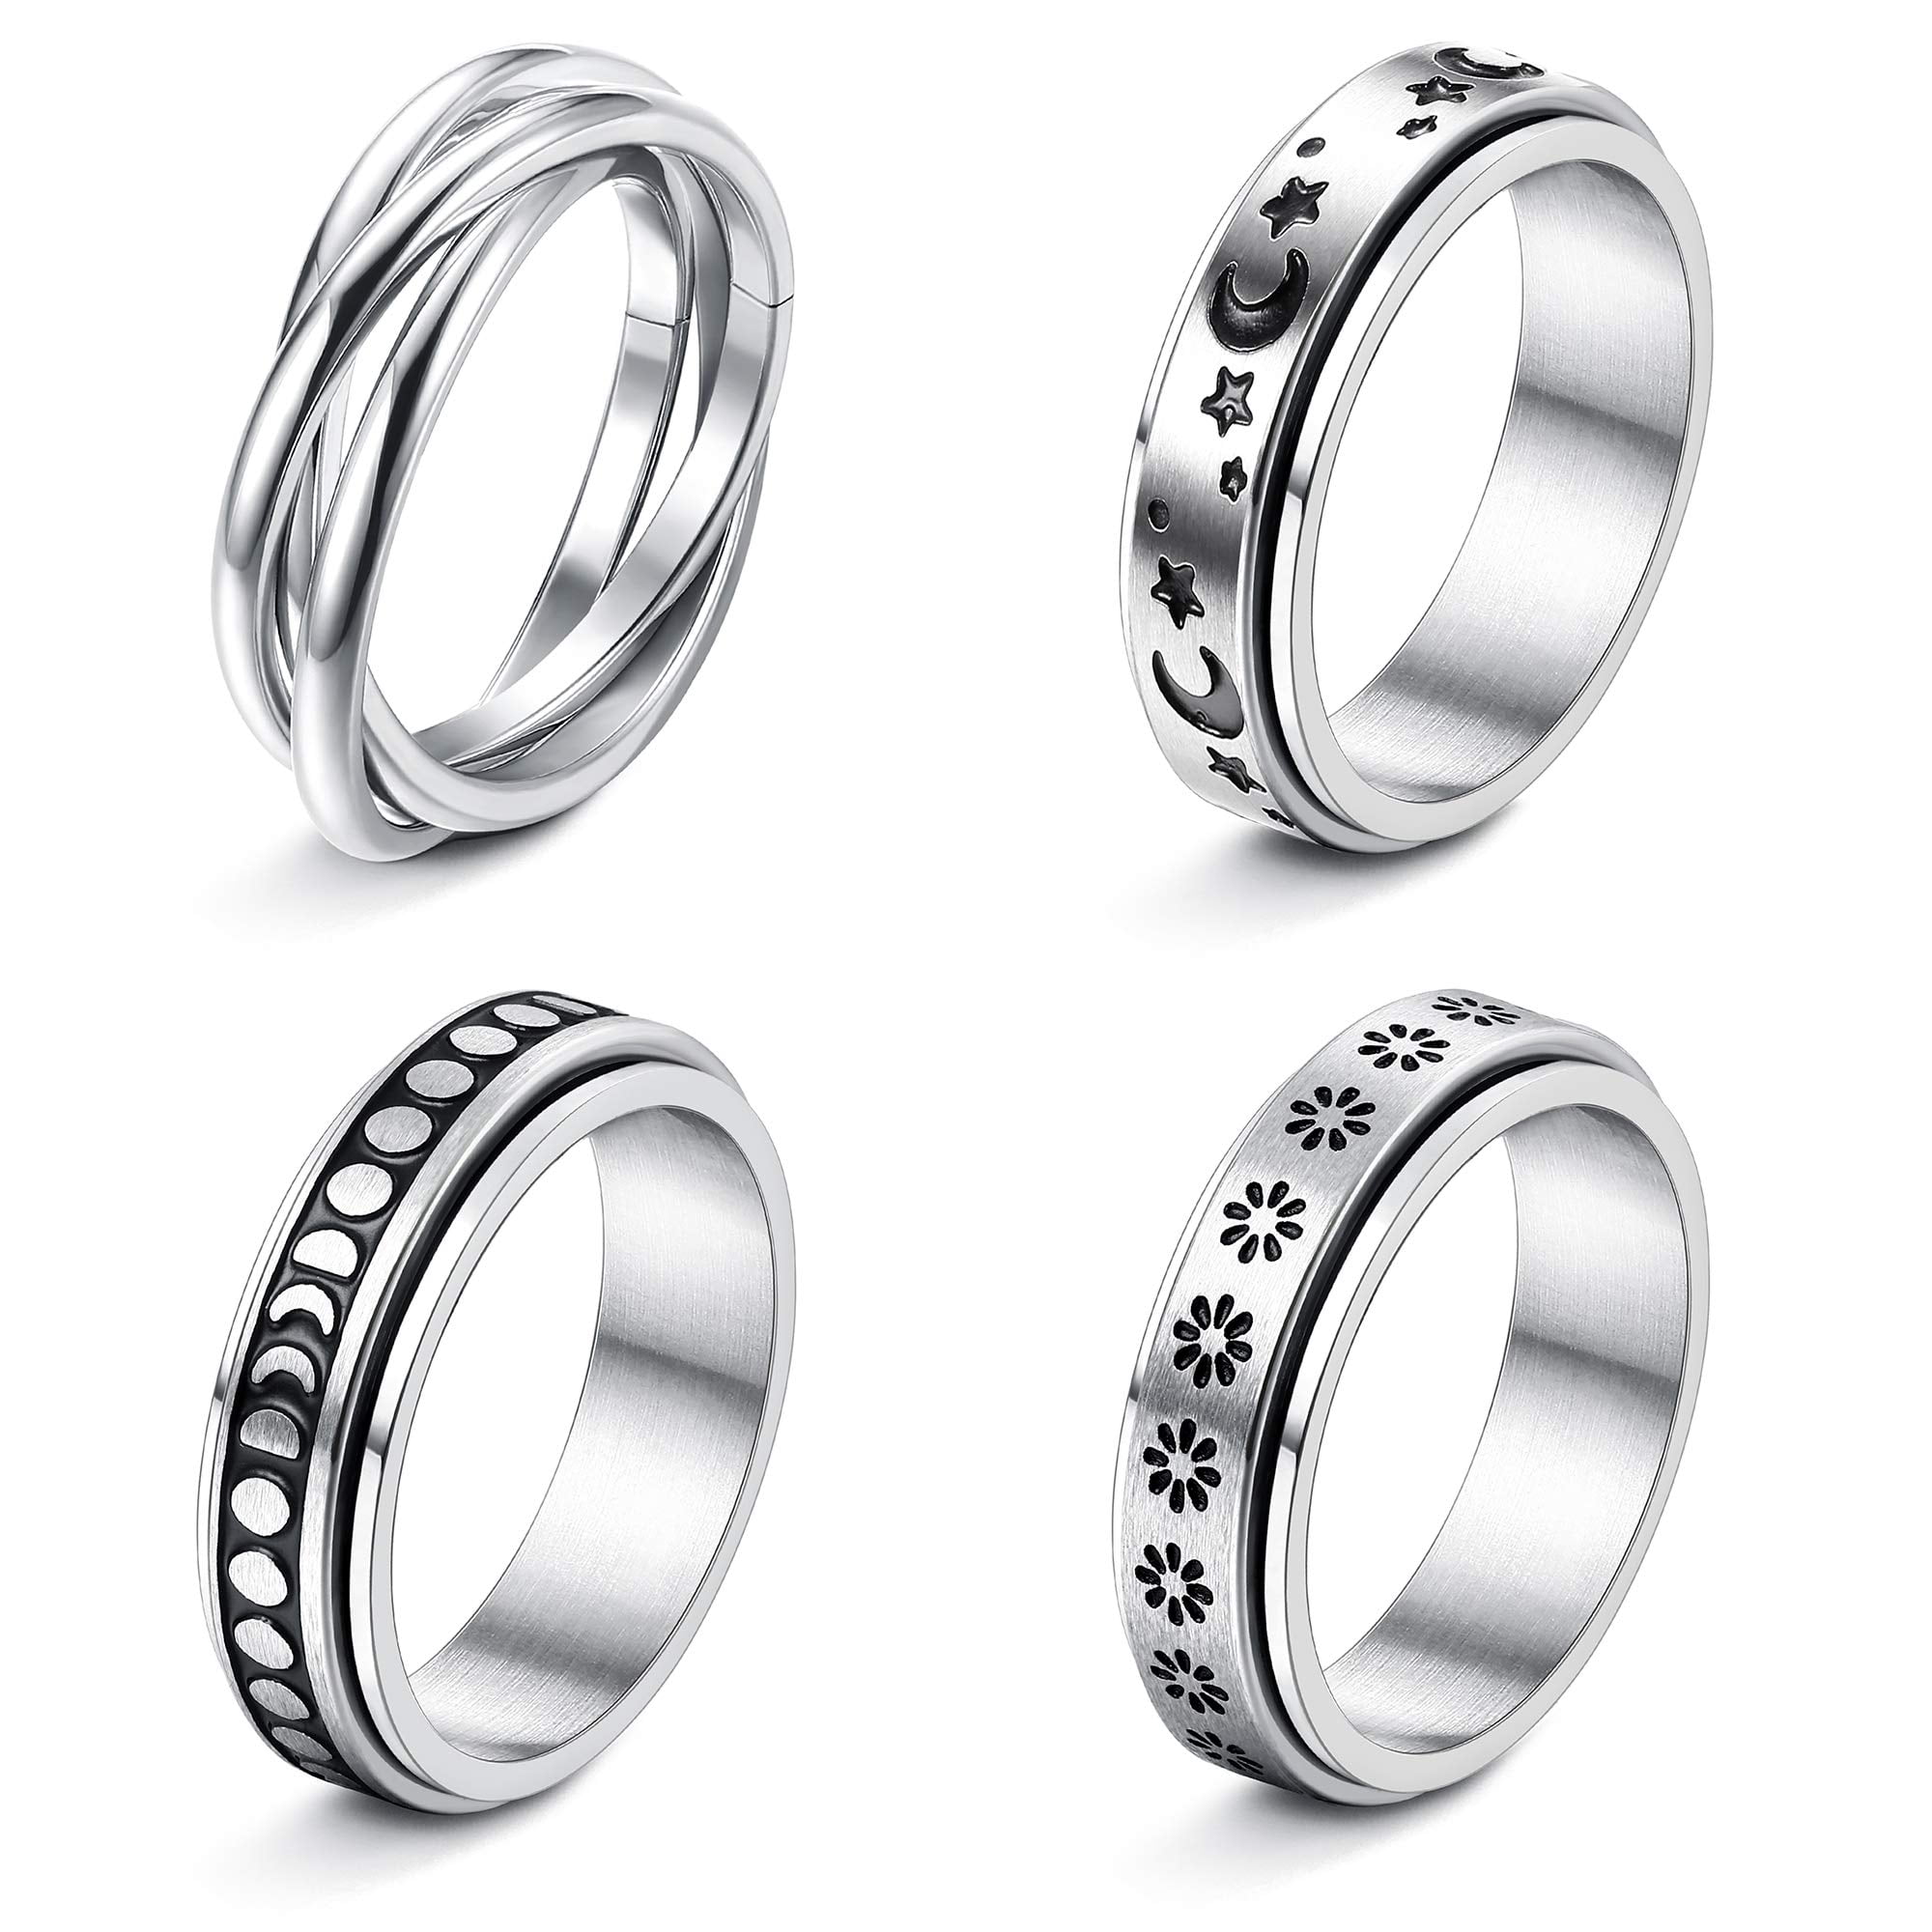 Spinner Ring Solid 925 Sterling Silver 5 Band Meditation Fidget Men's Wide Ring 